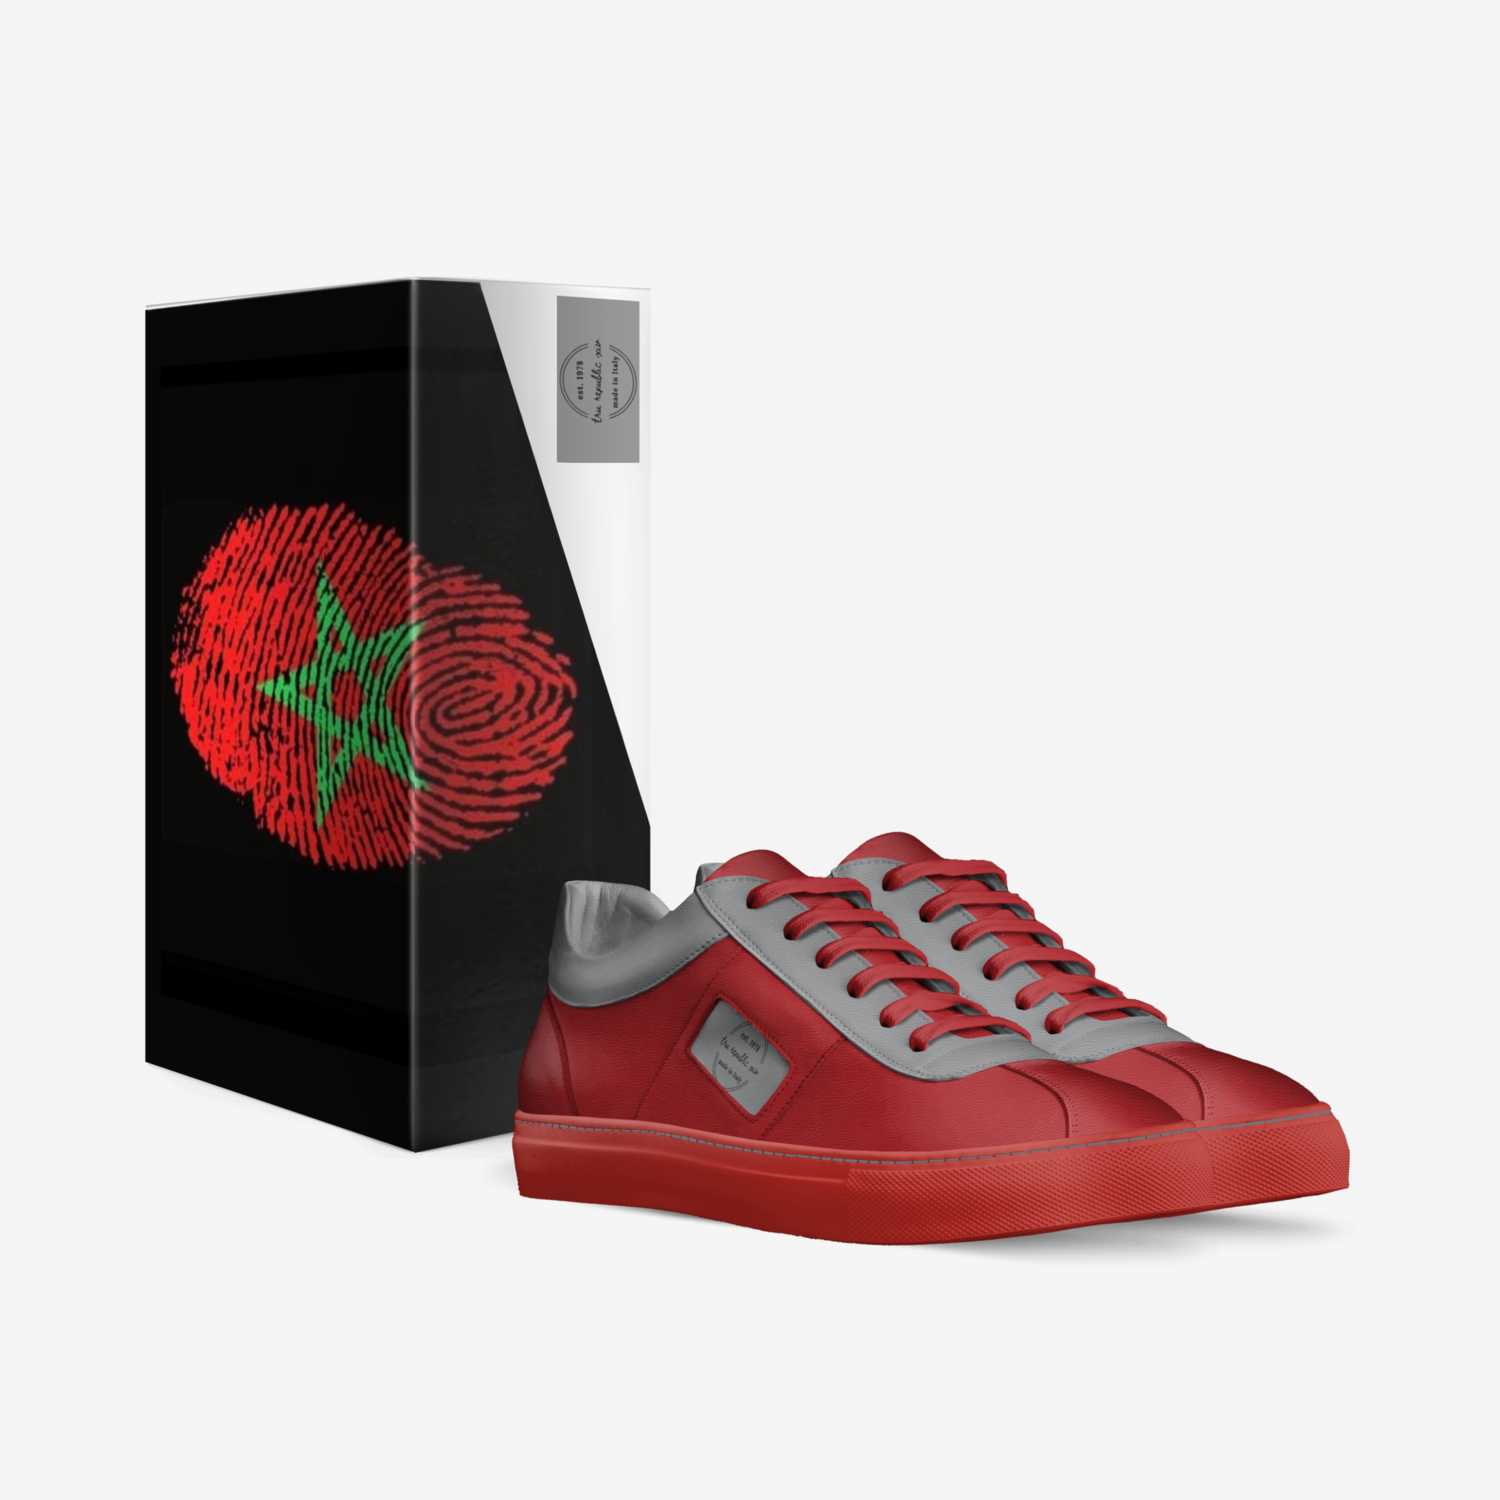 tru republic xiv custom made in Italy shoes by Raheem Abdul El | Box view